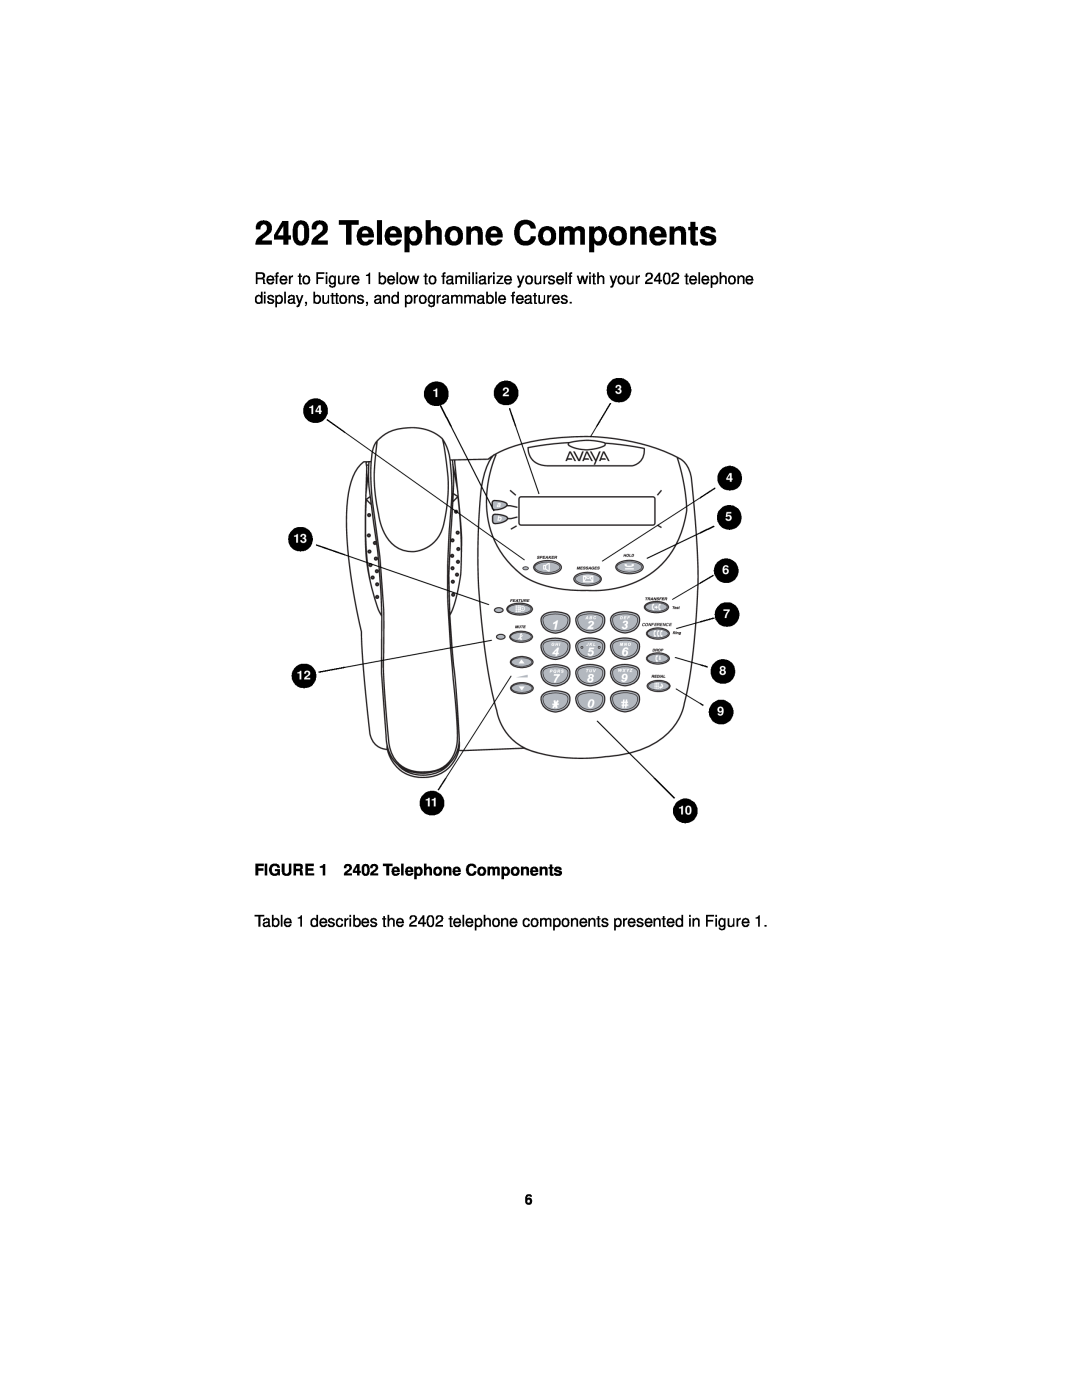 Avaya manual 2402 Telephone Components, Conference 